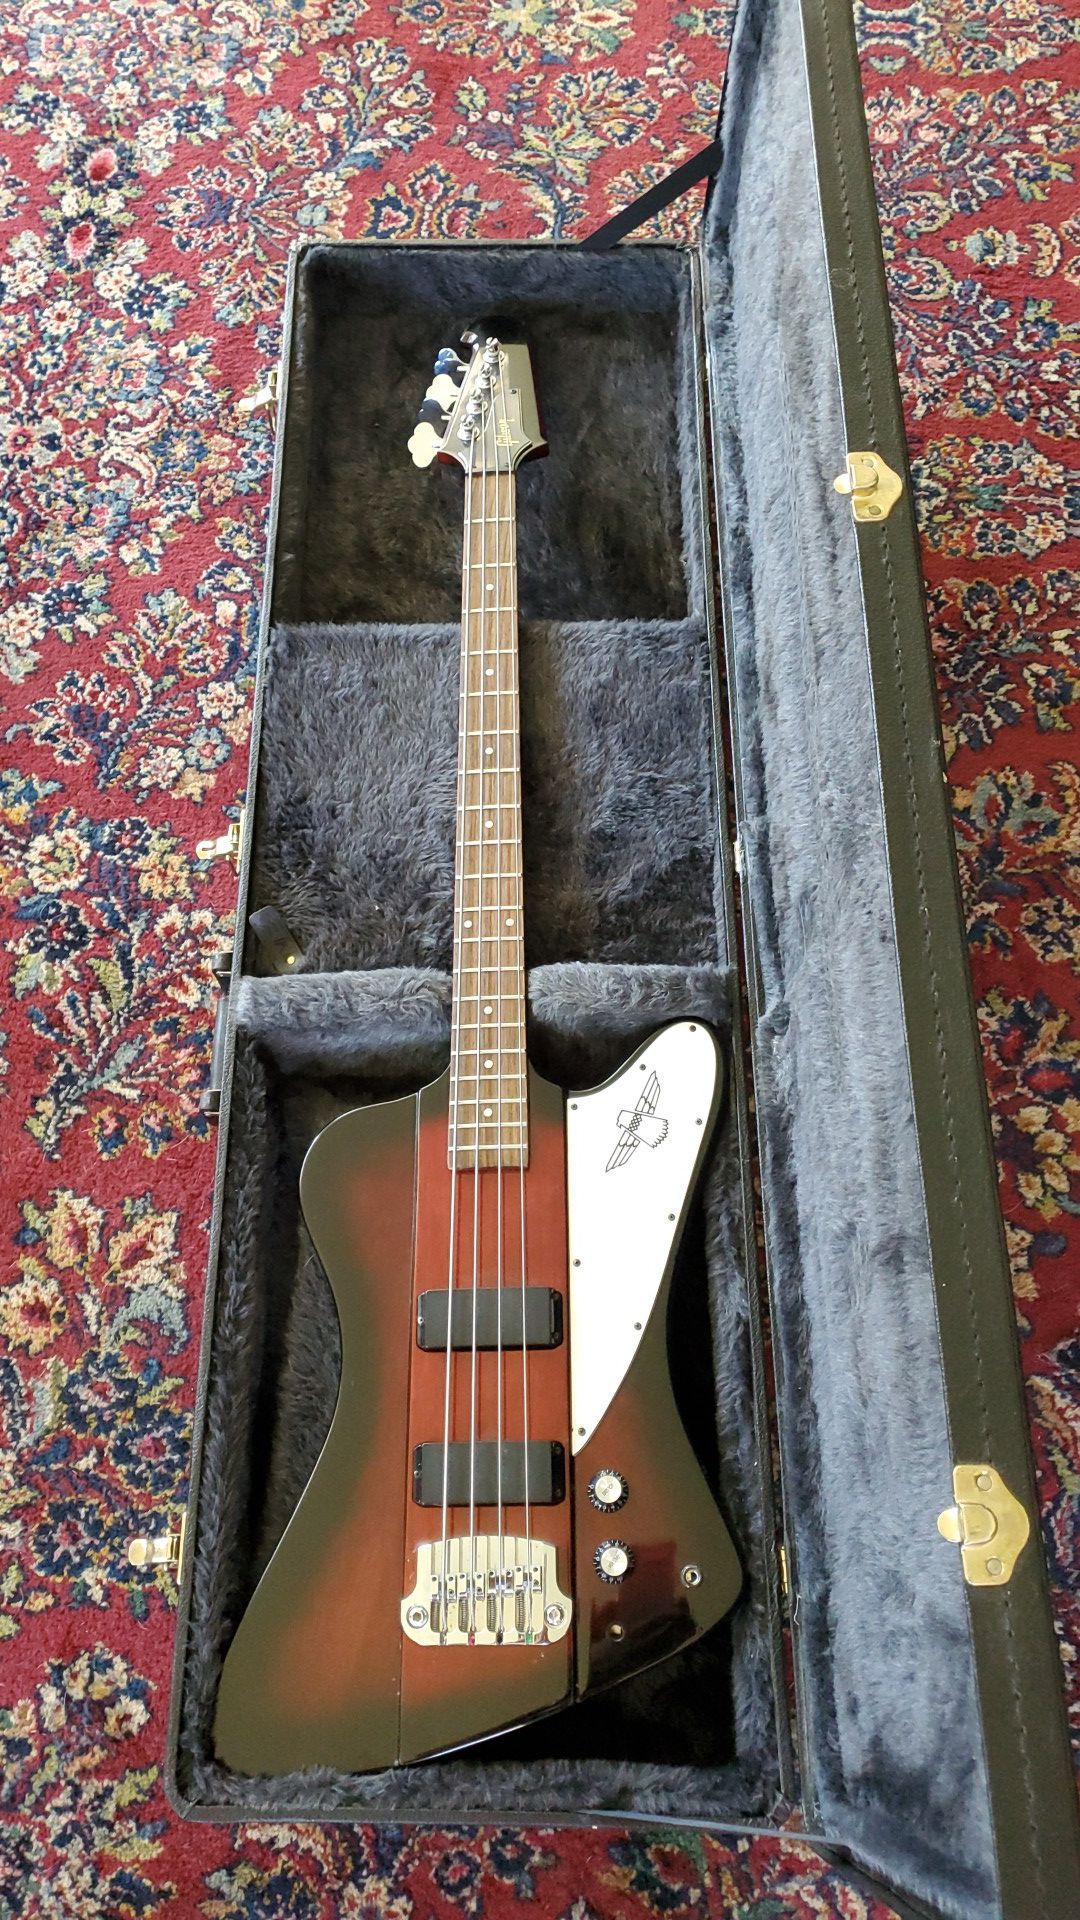 Epiphone Thunderbird 4 Bass with Gibson logo!